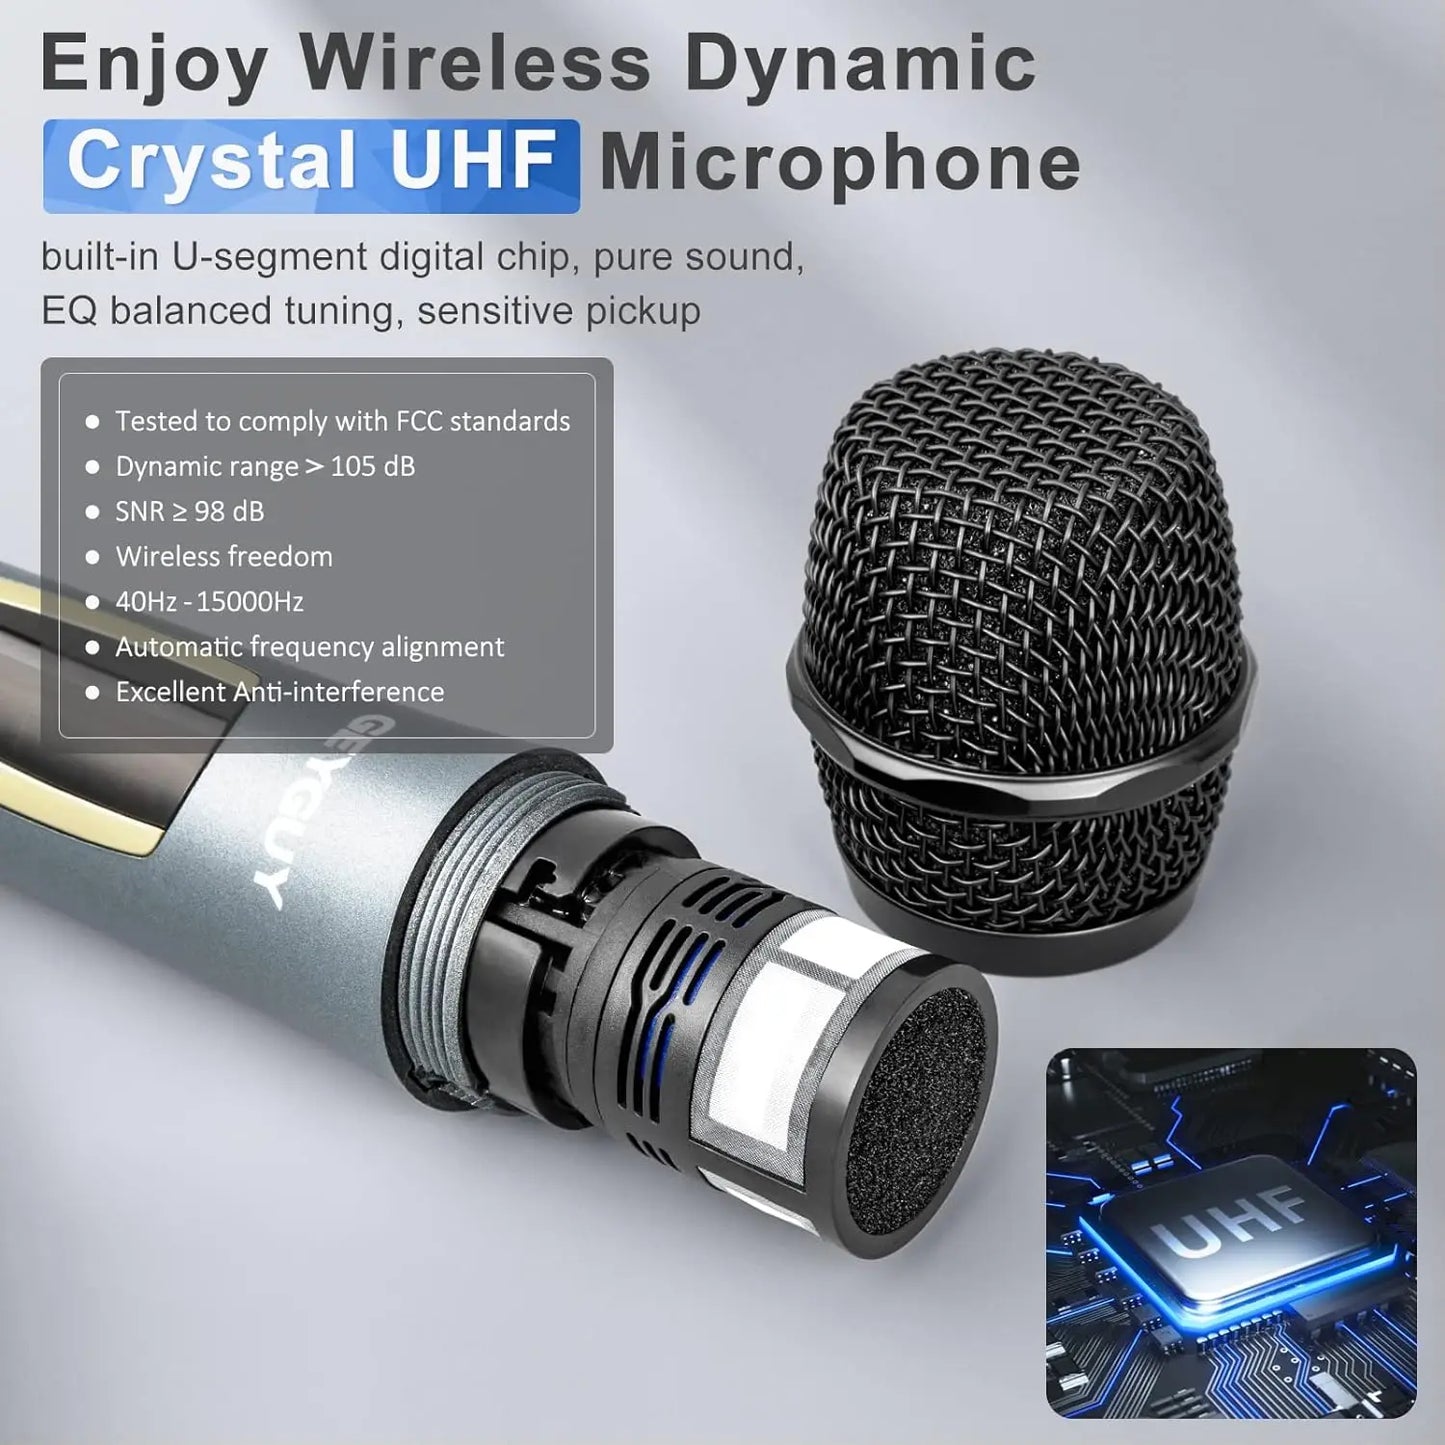 3-Way Portable PA System,10’’ Bluetooth Karaoke Machine